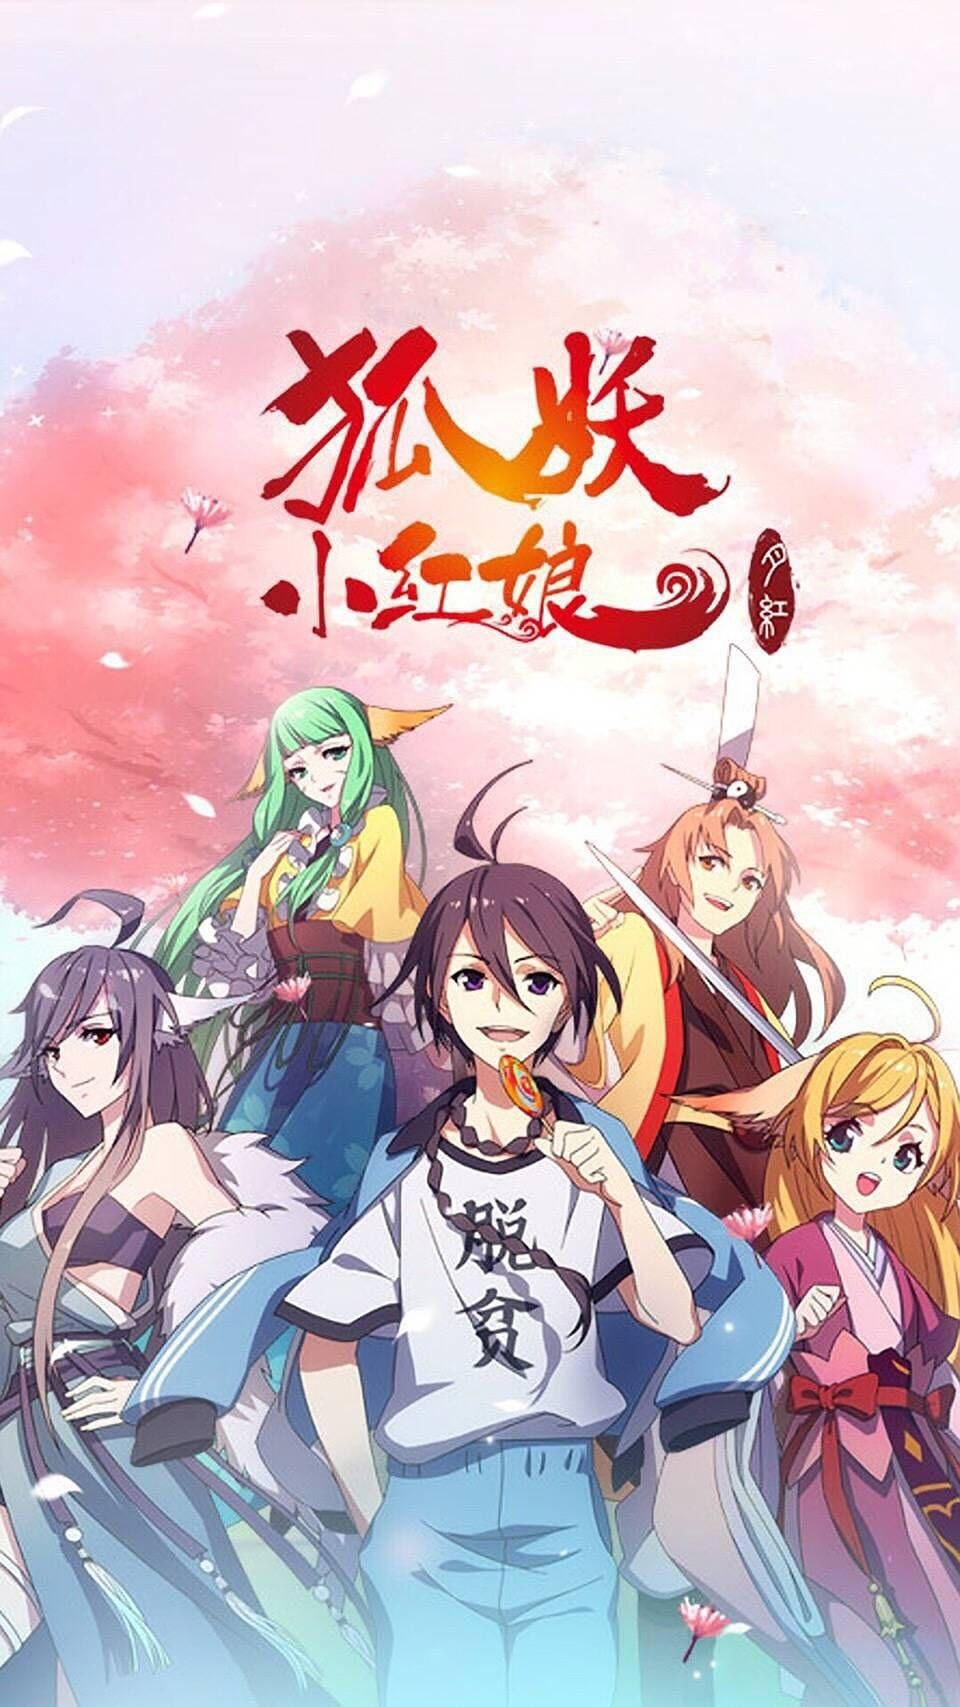 Hitori no Shita: The Outcast Season 4 has premiered last September